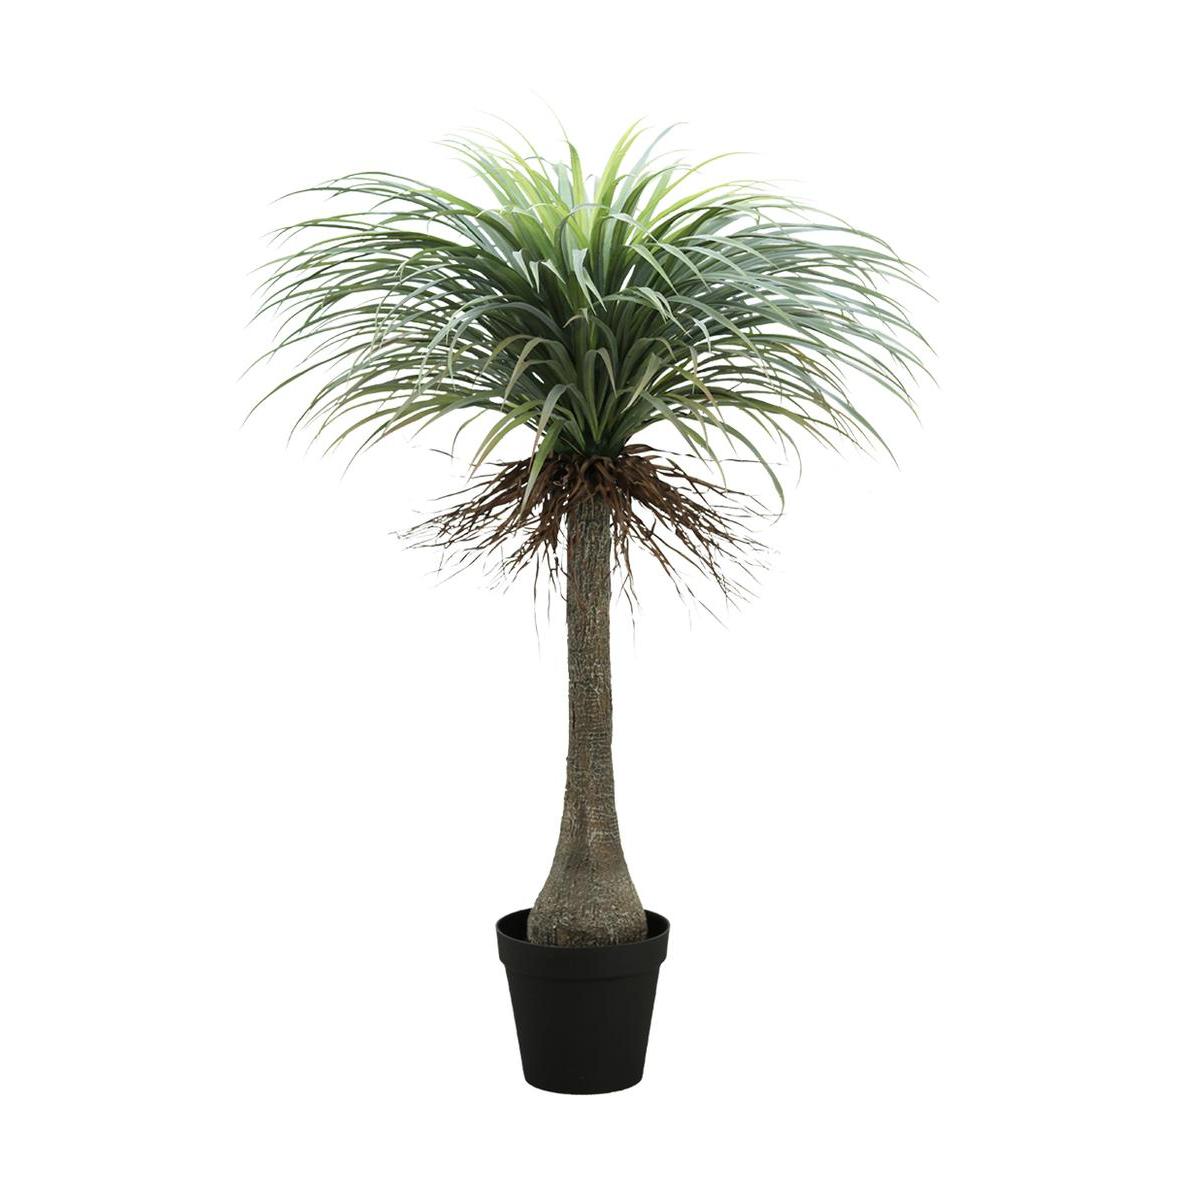 Yucca palmier feuillage effet naturel - H 150 cm - Vert